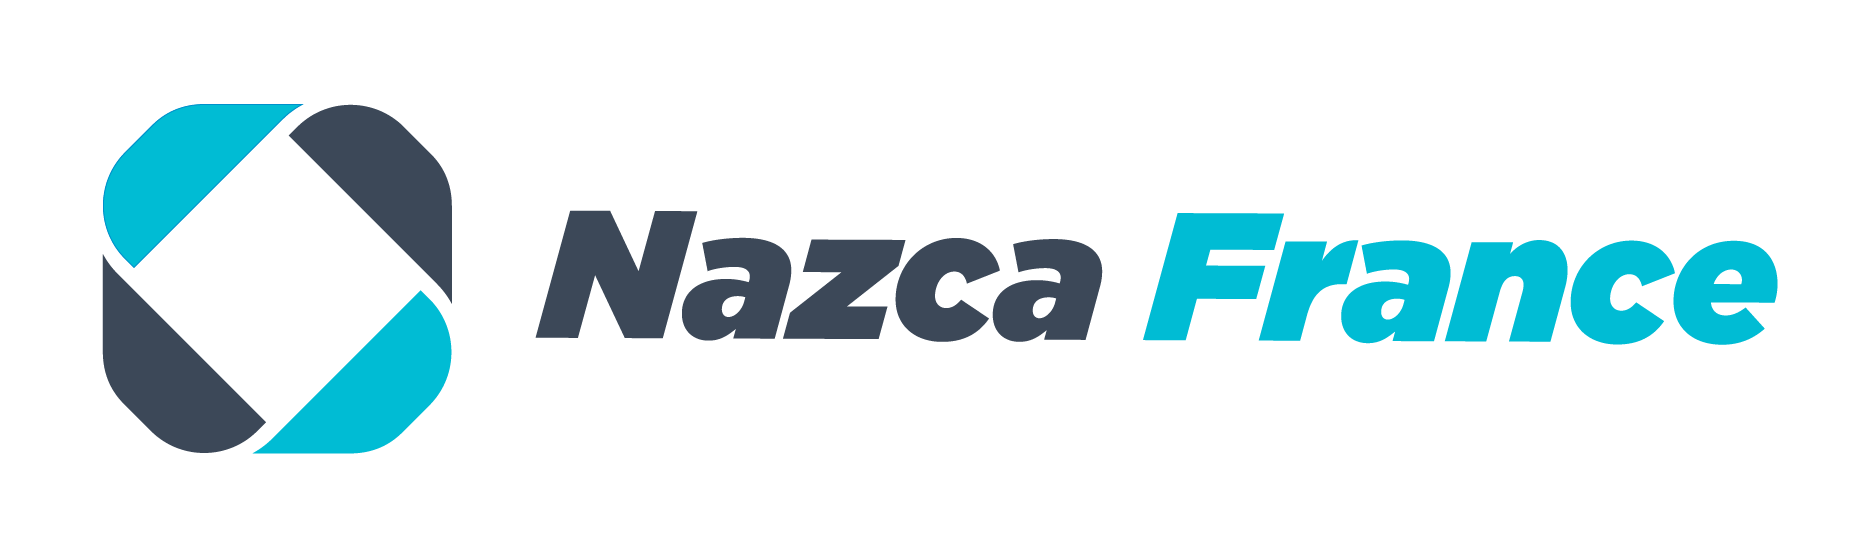 Nazca France